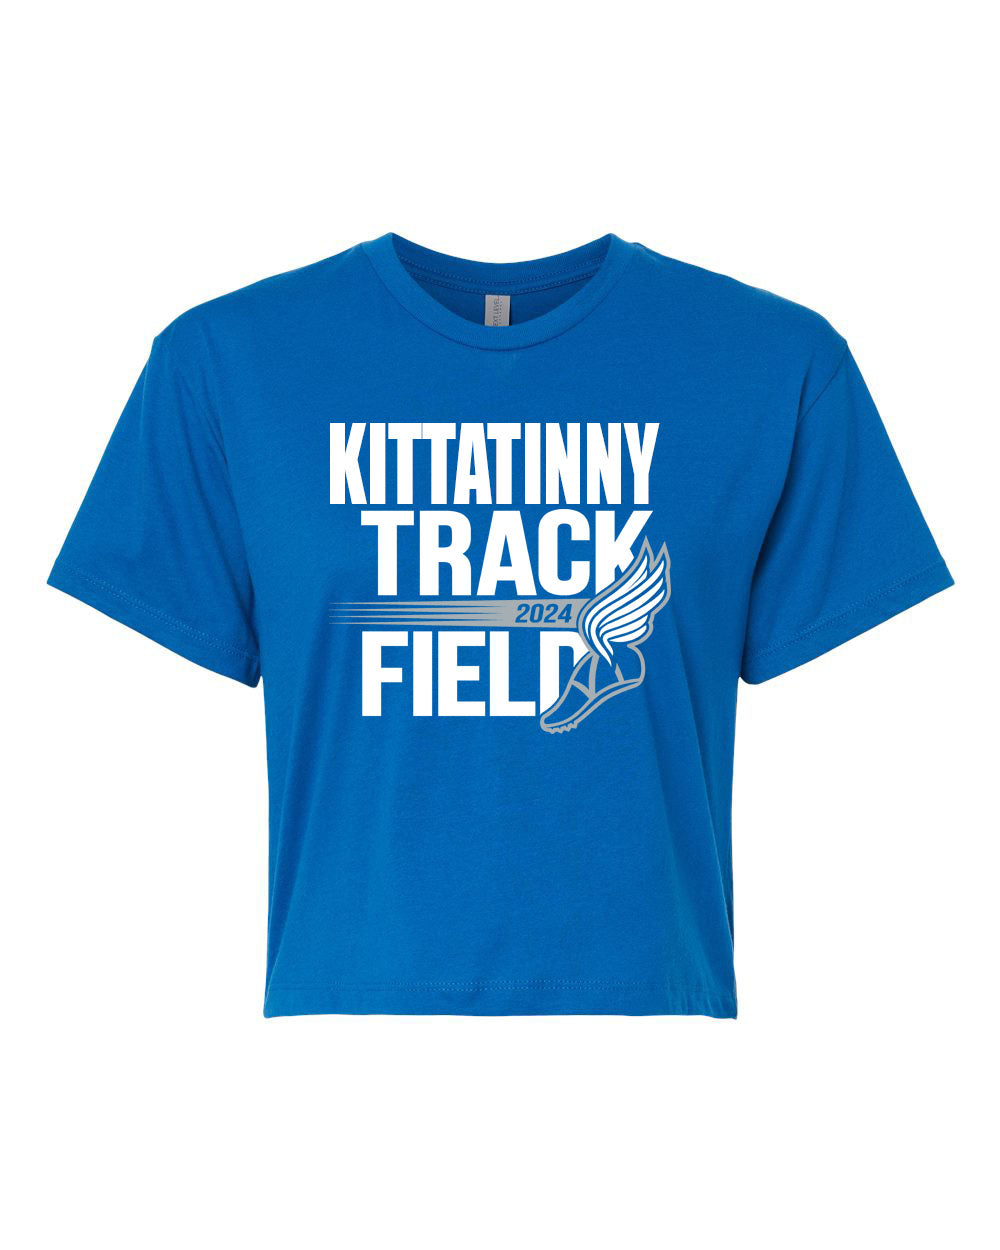 Kittatinny Track Design 6 Crop Top